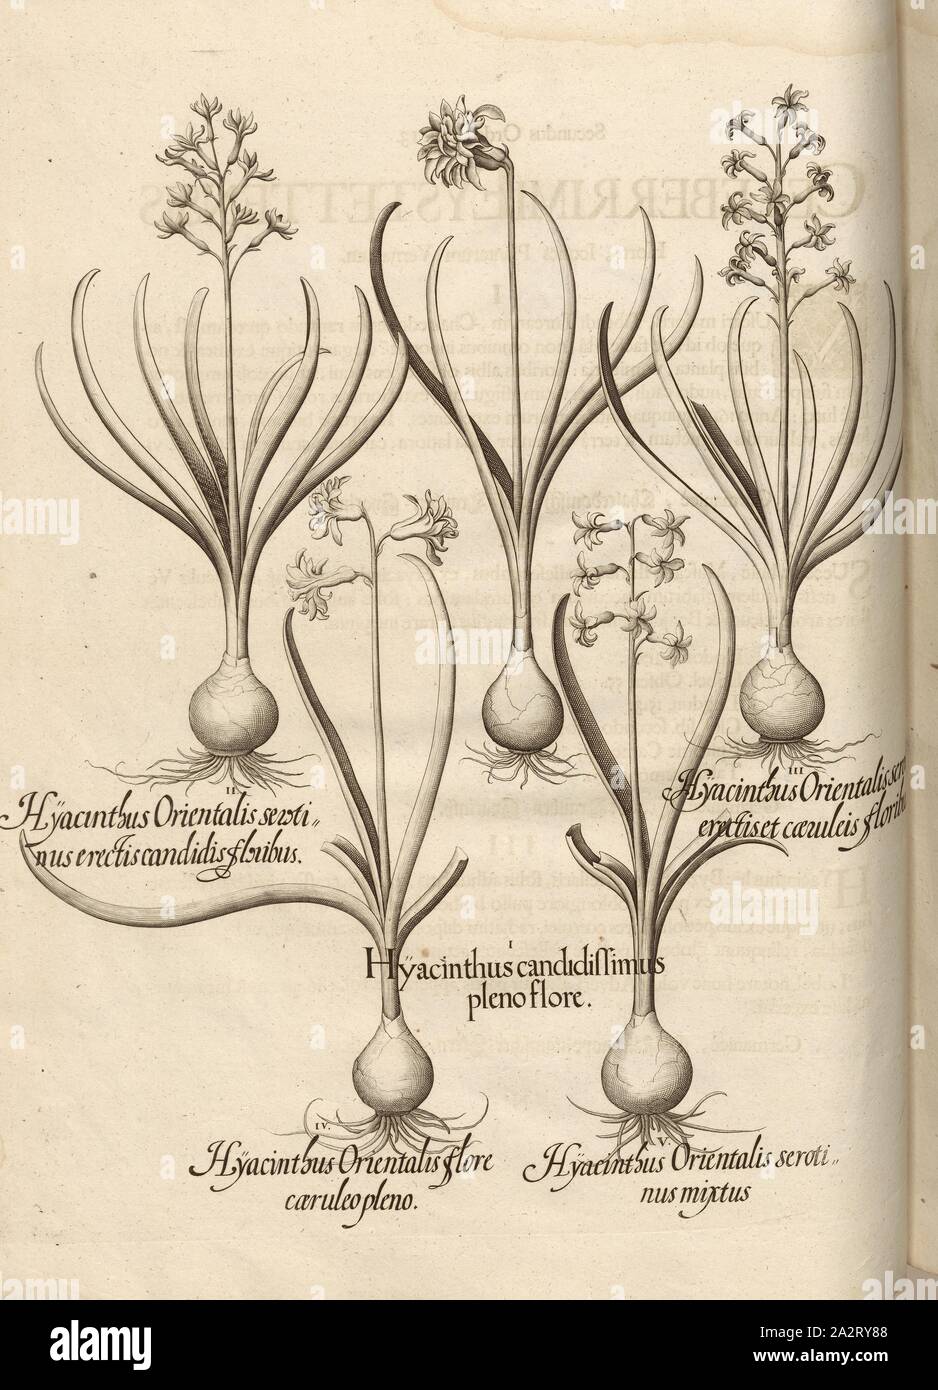 Hyacinthus ..., giacinti, incisione su rame, p. 106, Besler, Basilio; Jungermann, Ludwig, 1713, basilio Besler: Hortus Eystettensis (...). Nürnberg, 1713 Foto Stock